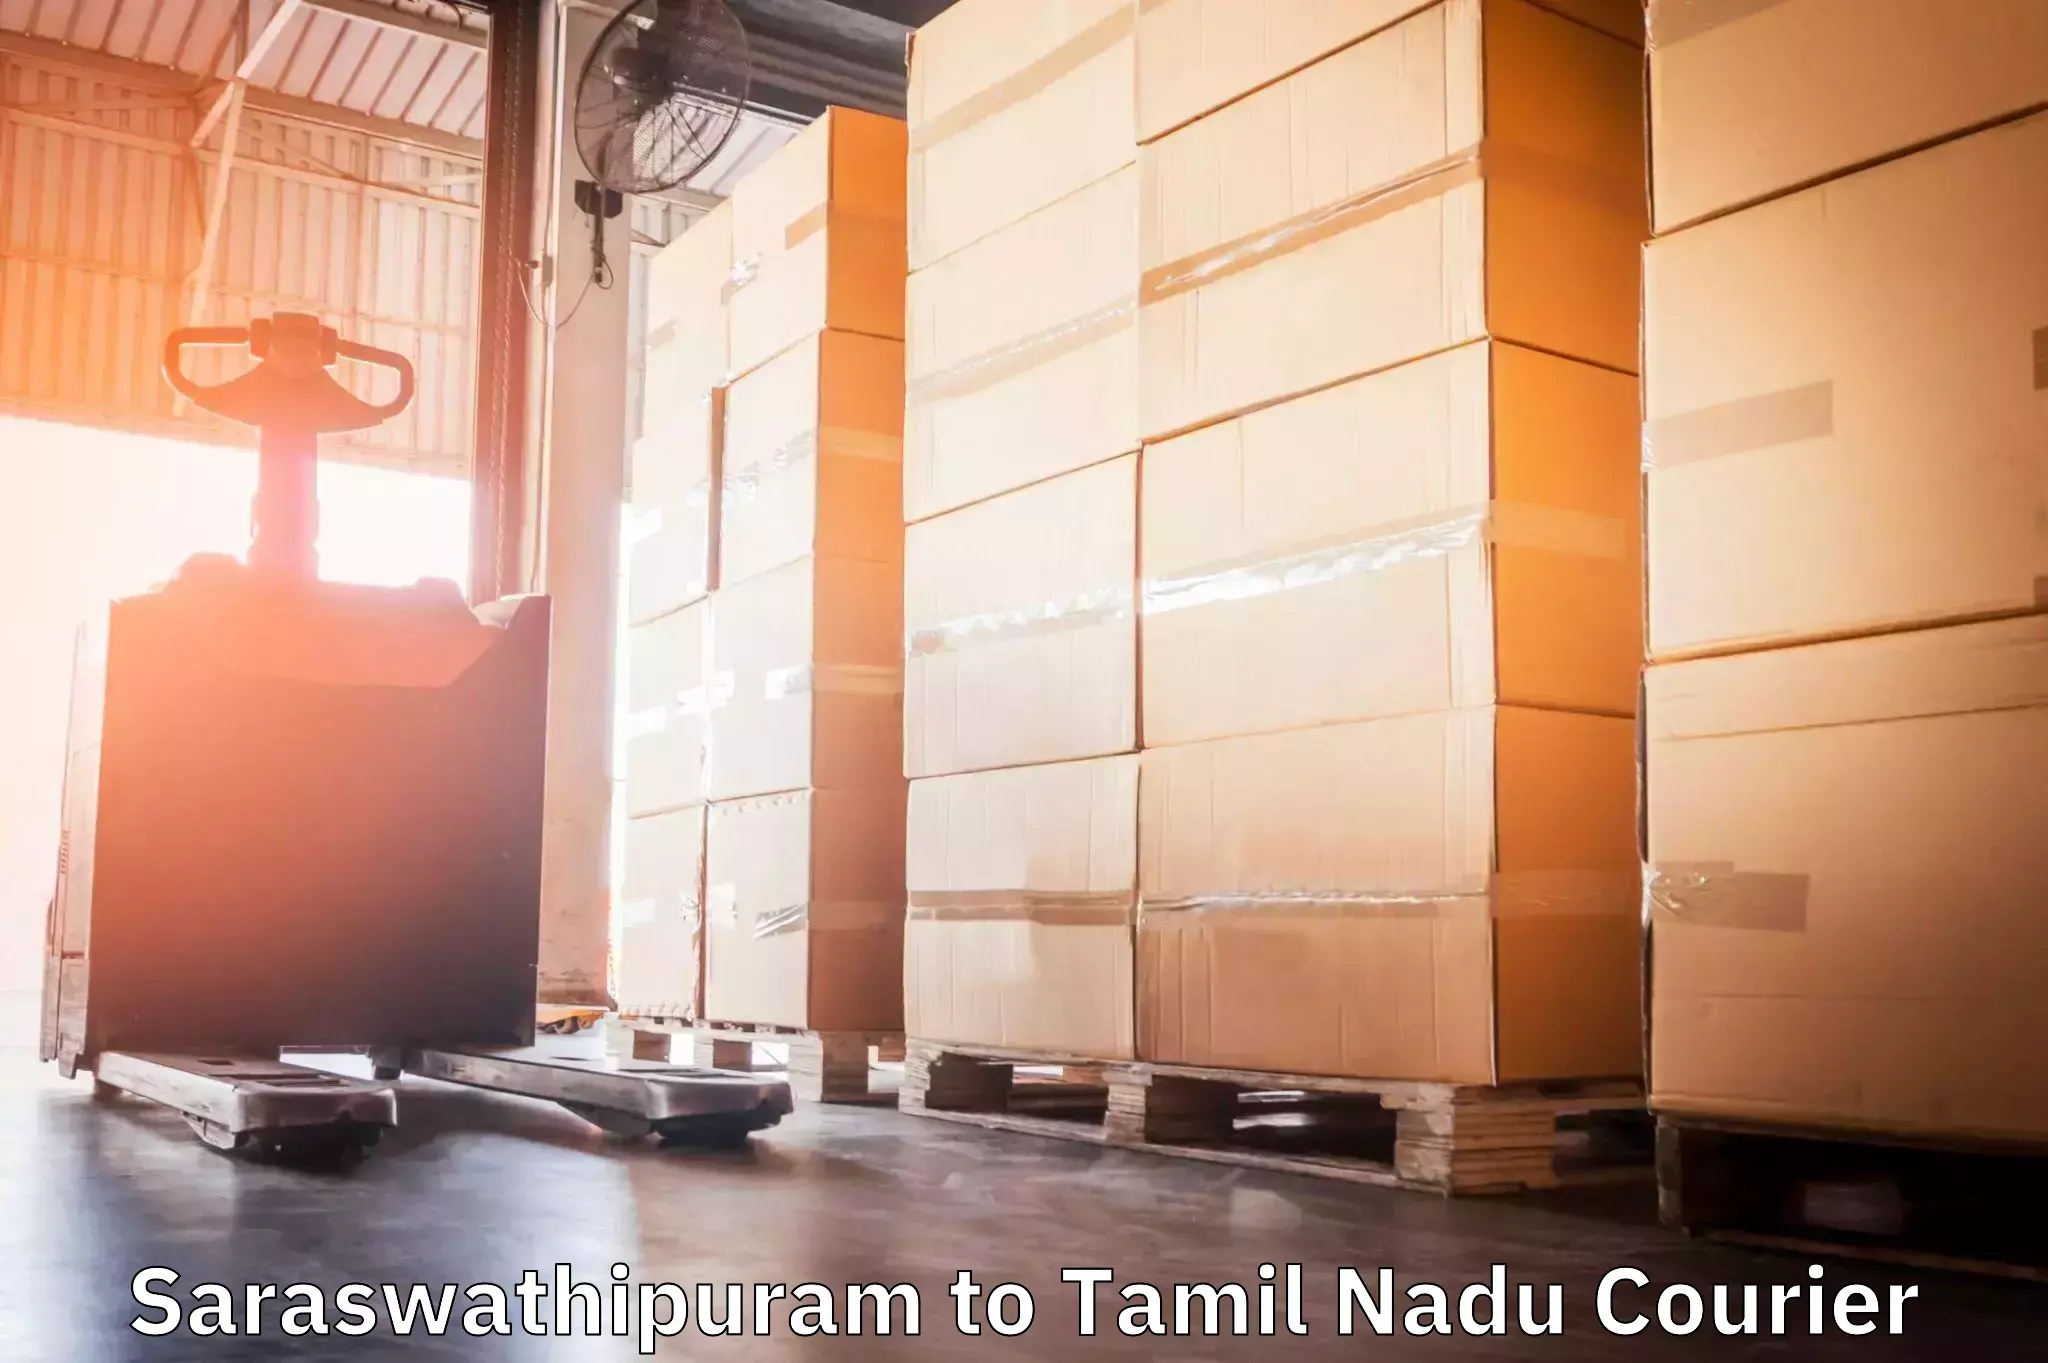 Personalized courier experiences Saraswathipuram to Tambaram